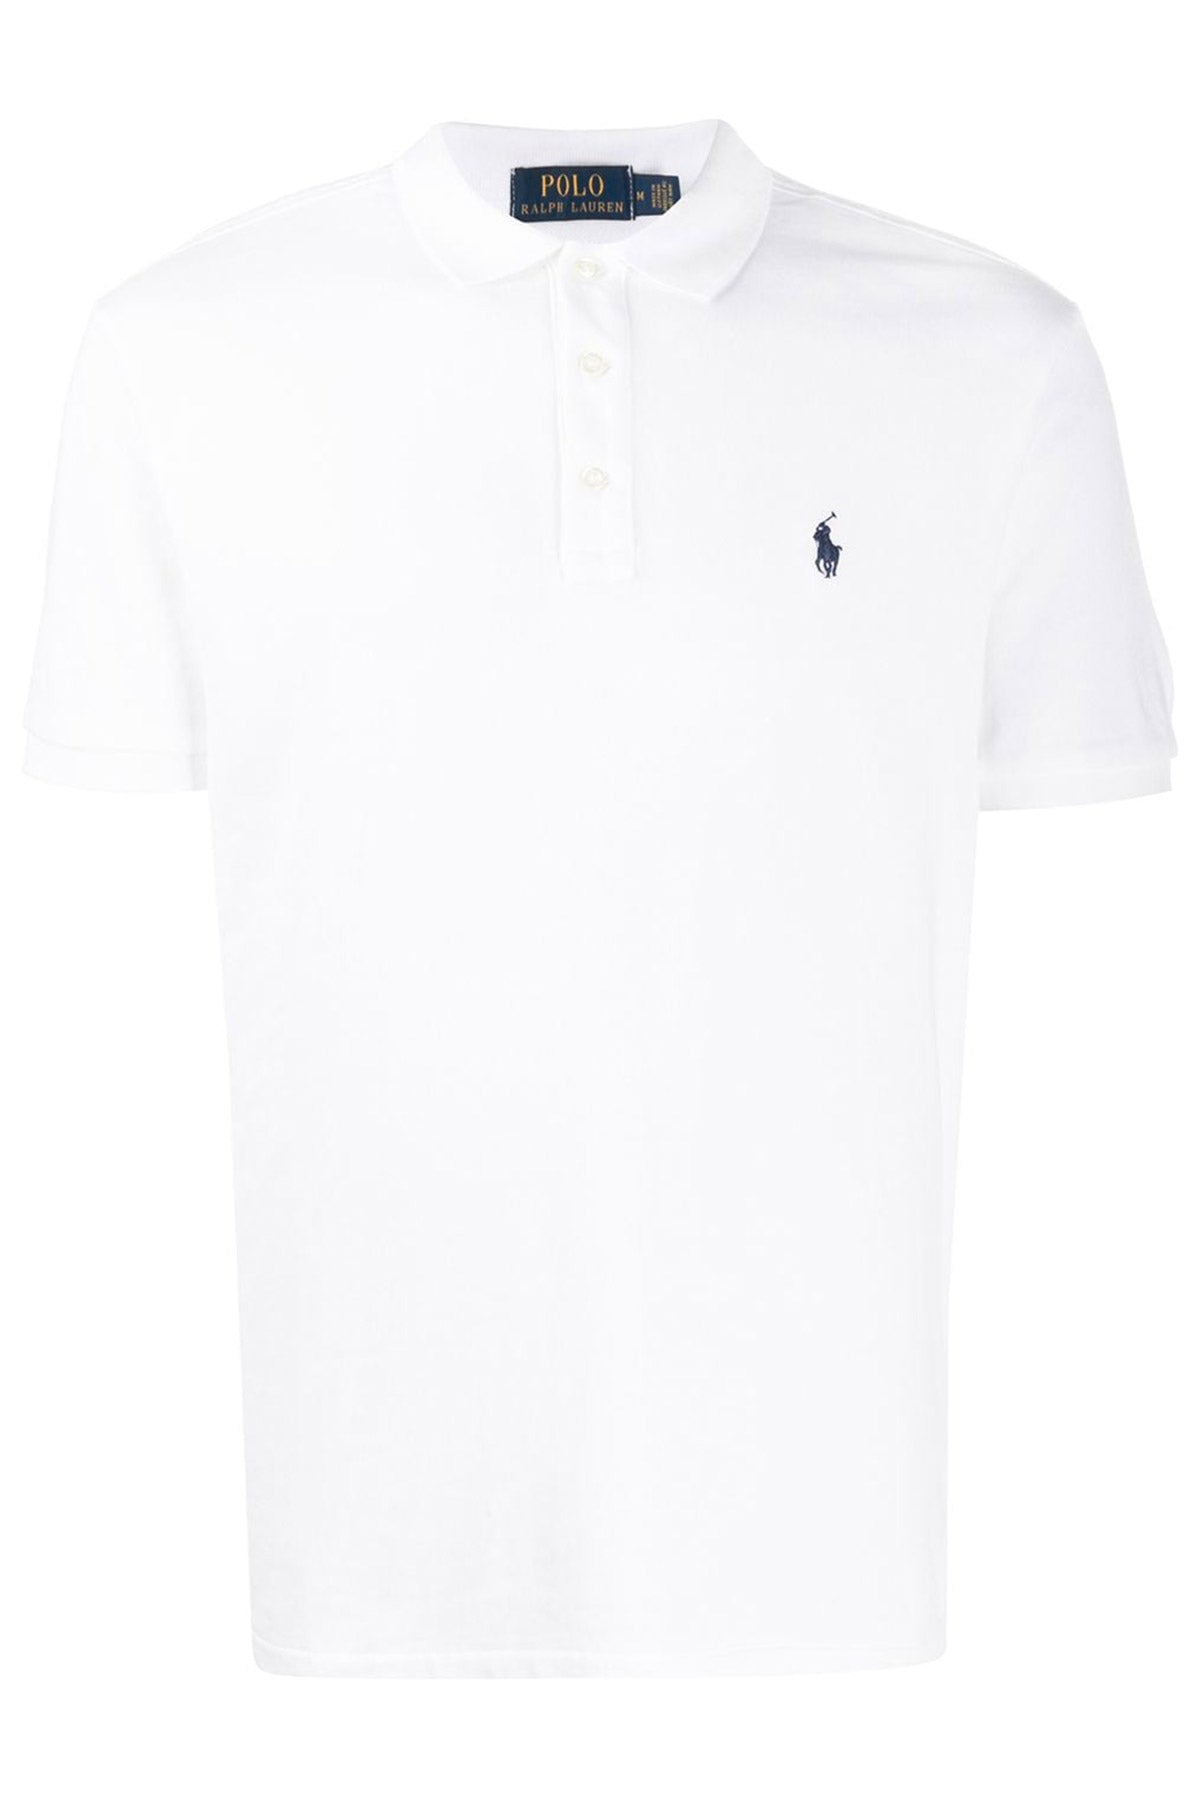 Polo Ralph Lauren Custom Fit T-shirt-Libas Trendy Fashion Store